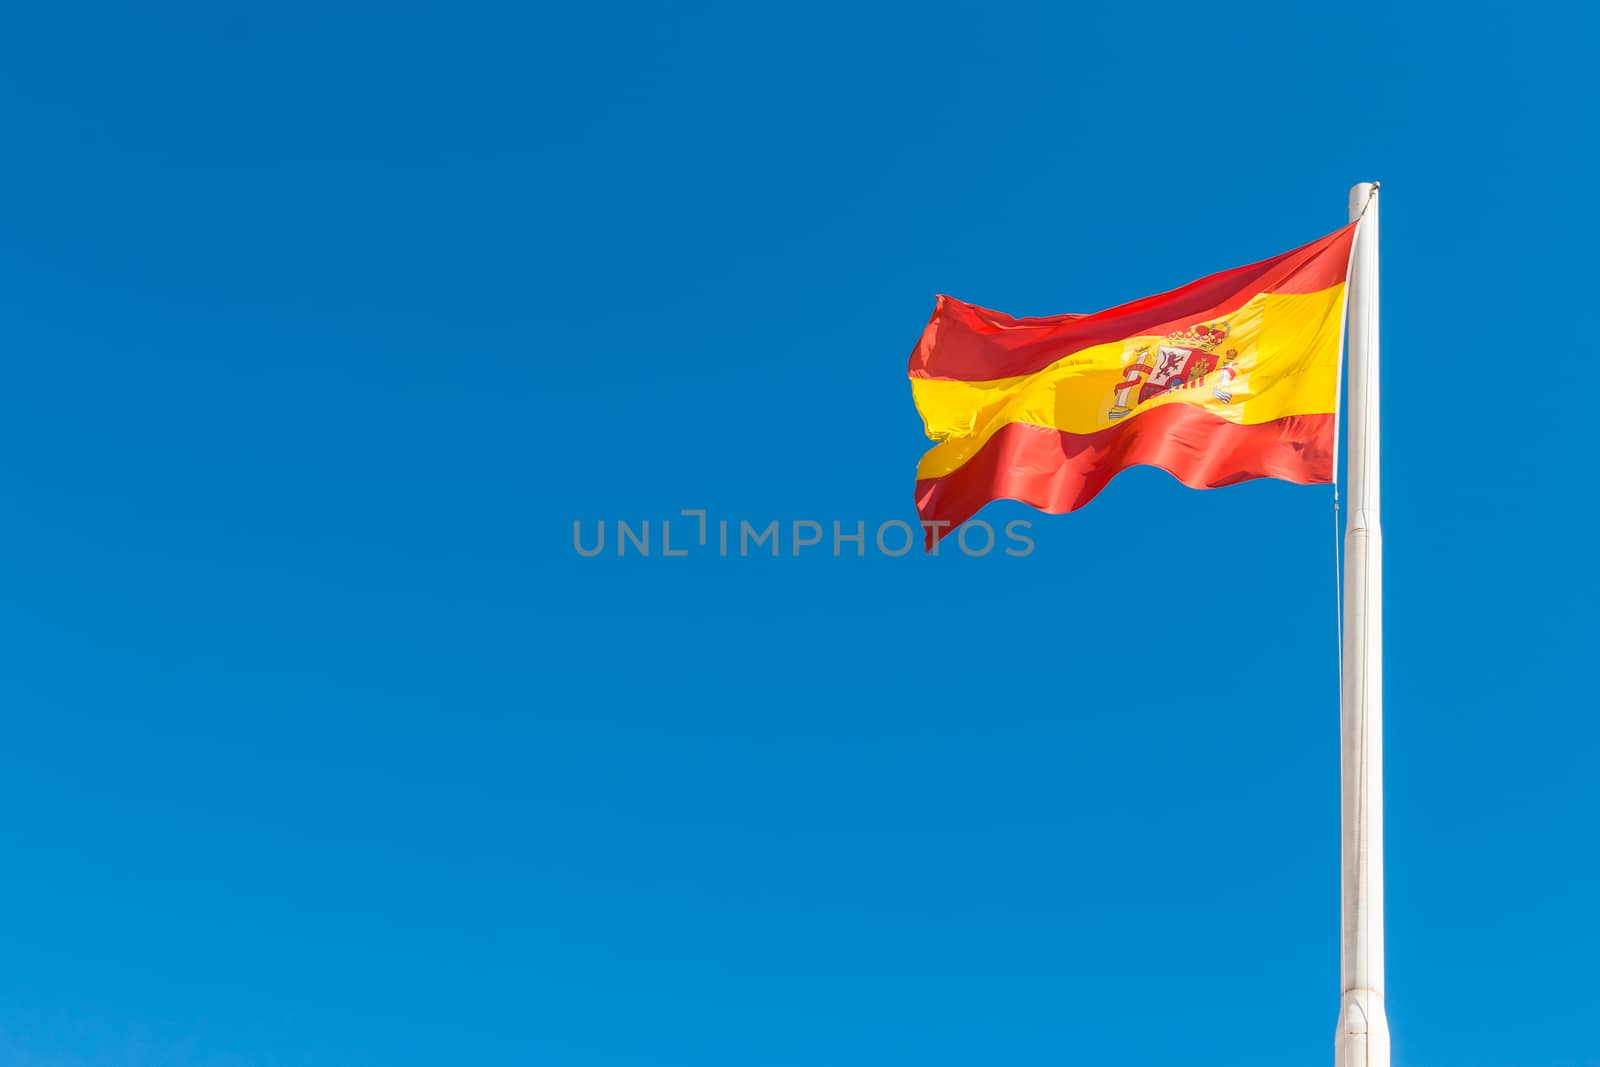 Spanish flag waving in the blue sky. Flag of Spain.